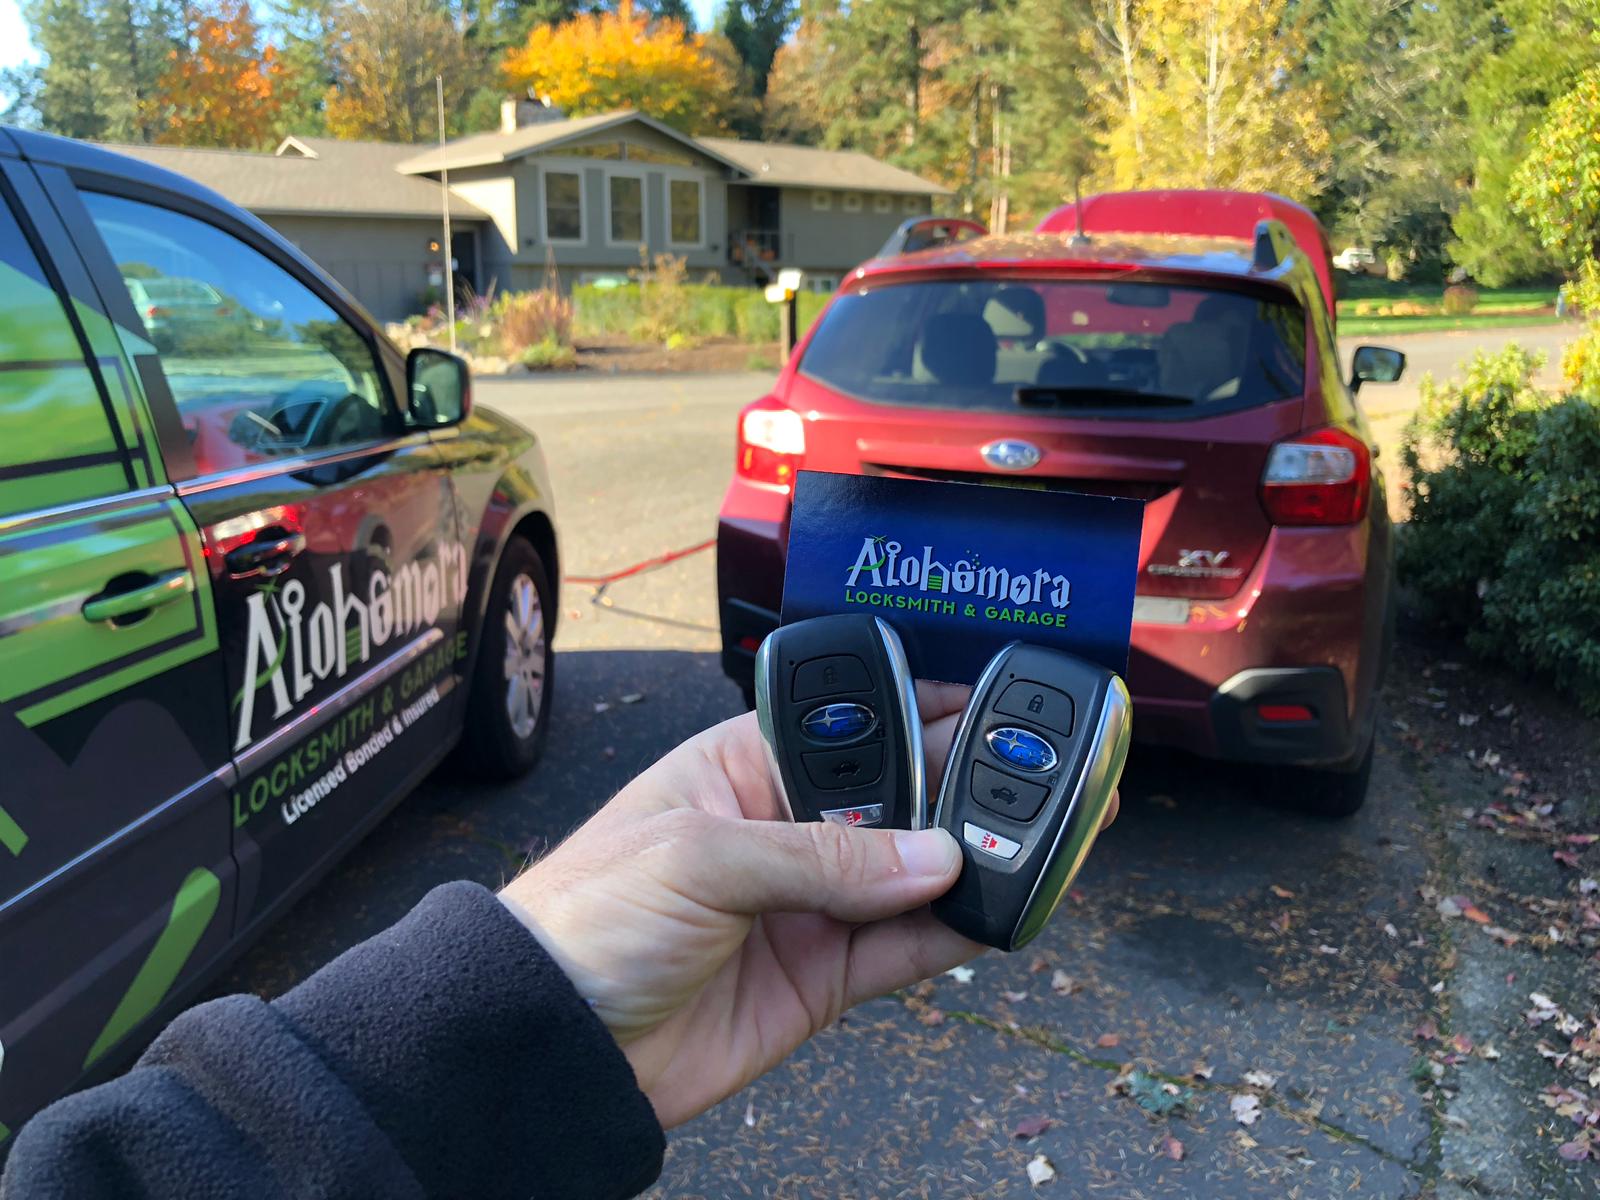 Alohomora Locksmith Portland Business Card with two keys in front of a Subaru car | Portland Automotive Locksmith